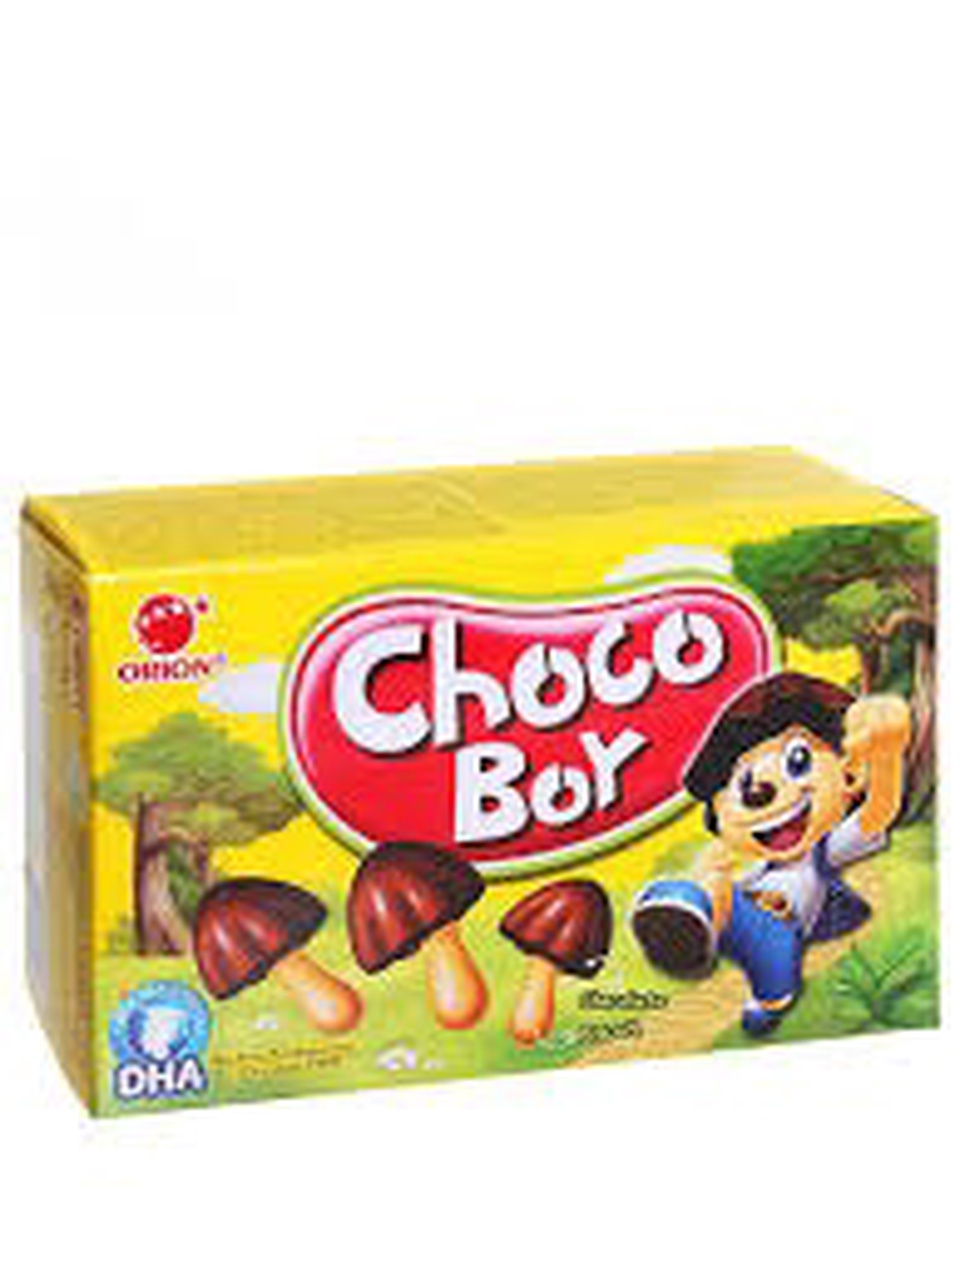 Choco Boy печенье 45г - 37,85 ₽, заказать онлайн.